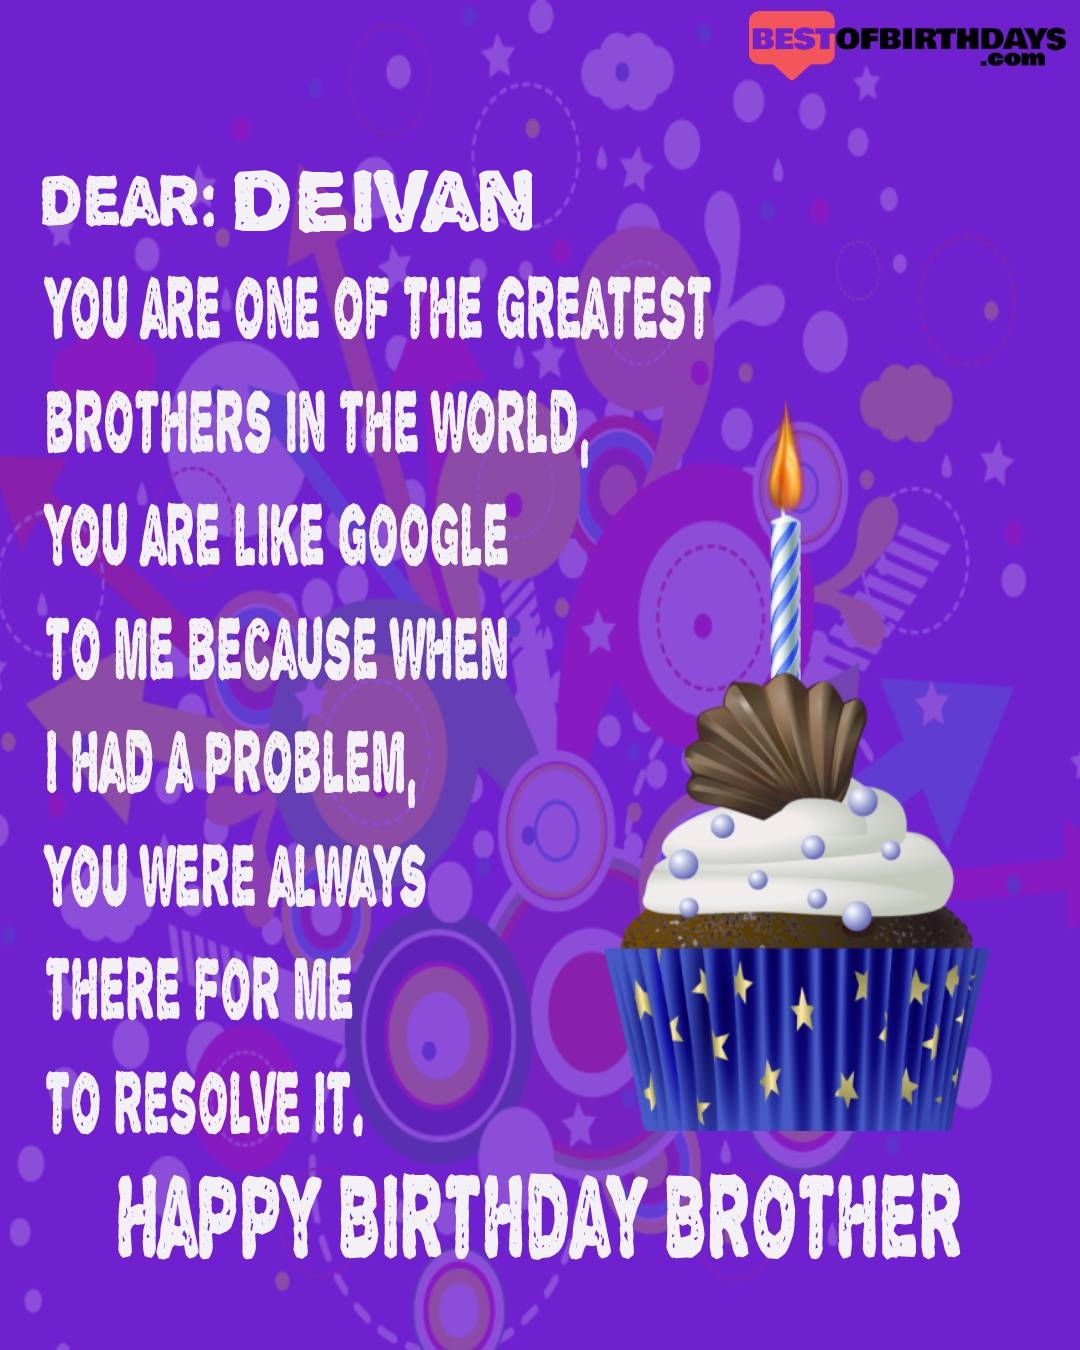 Happy birthday deivan bhai brother bro